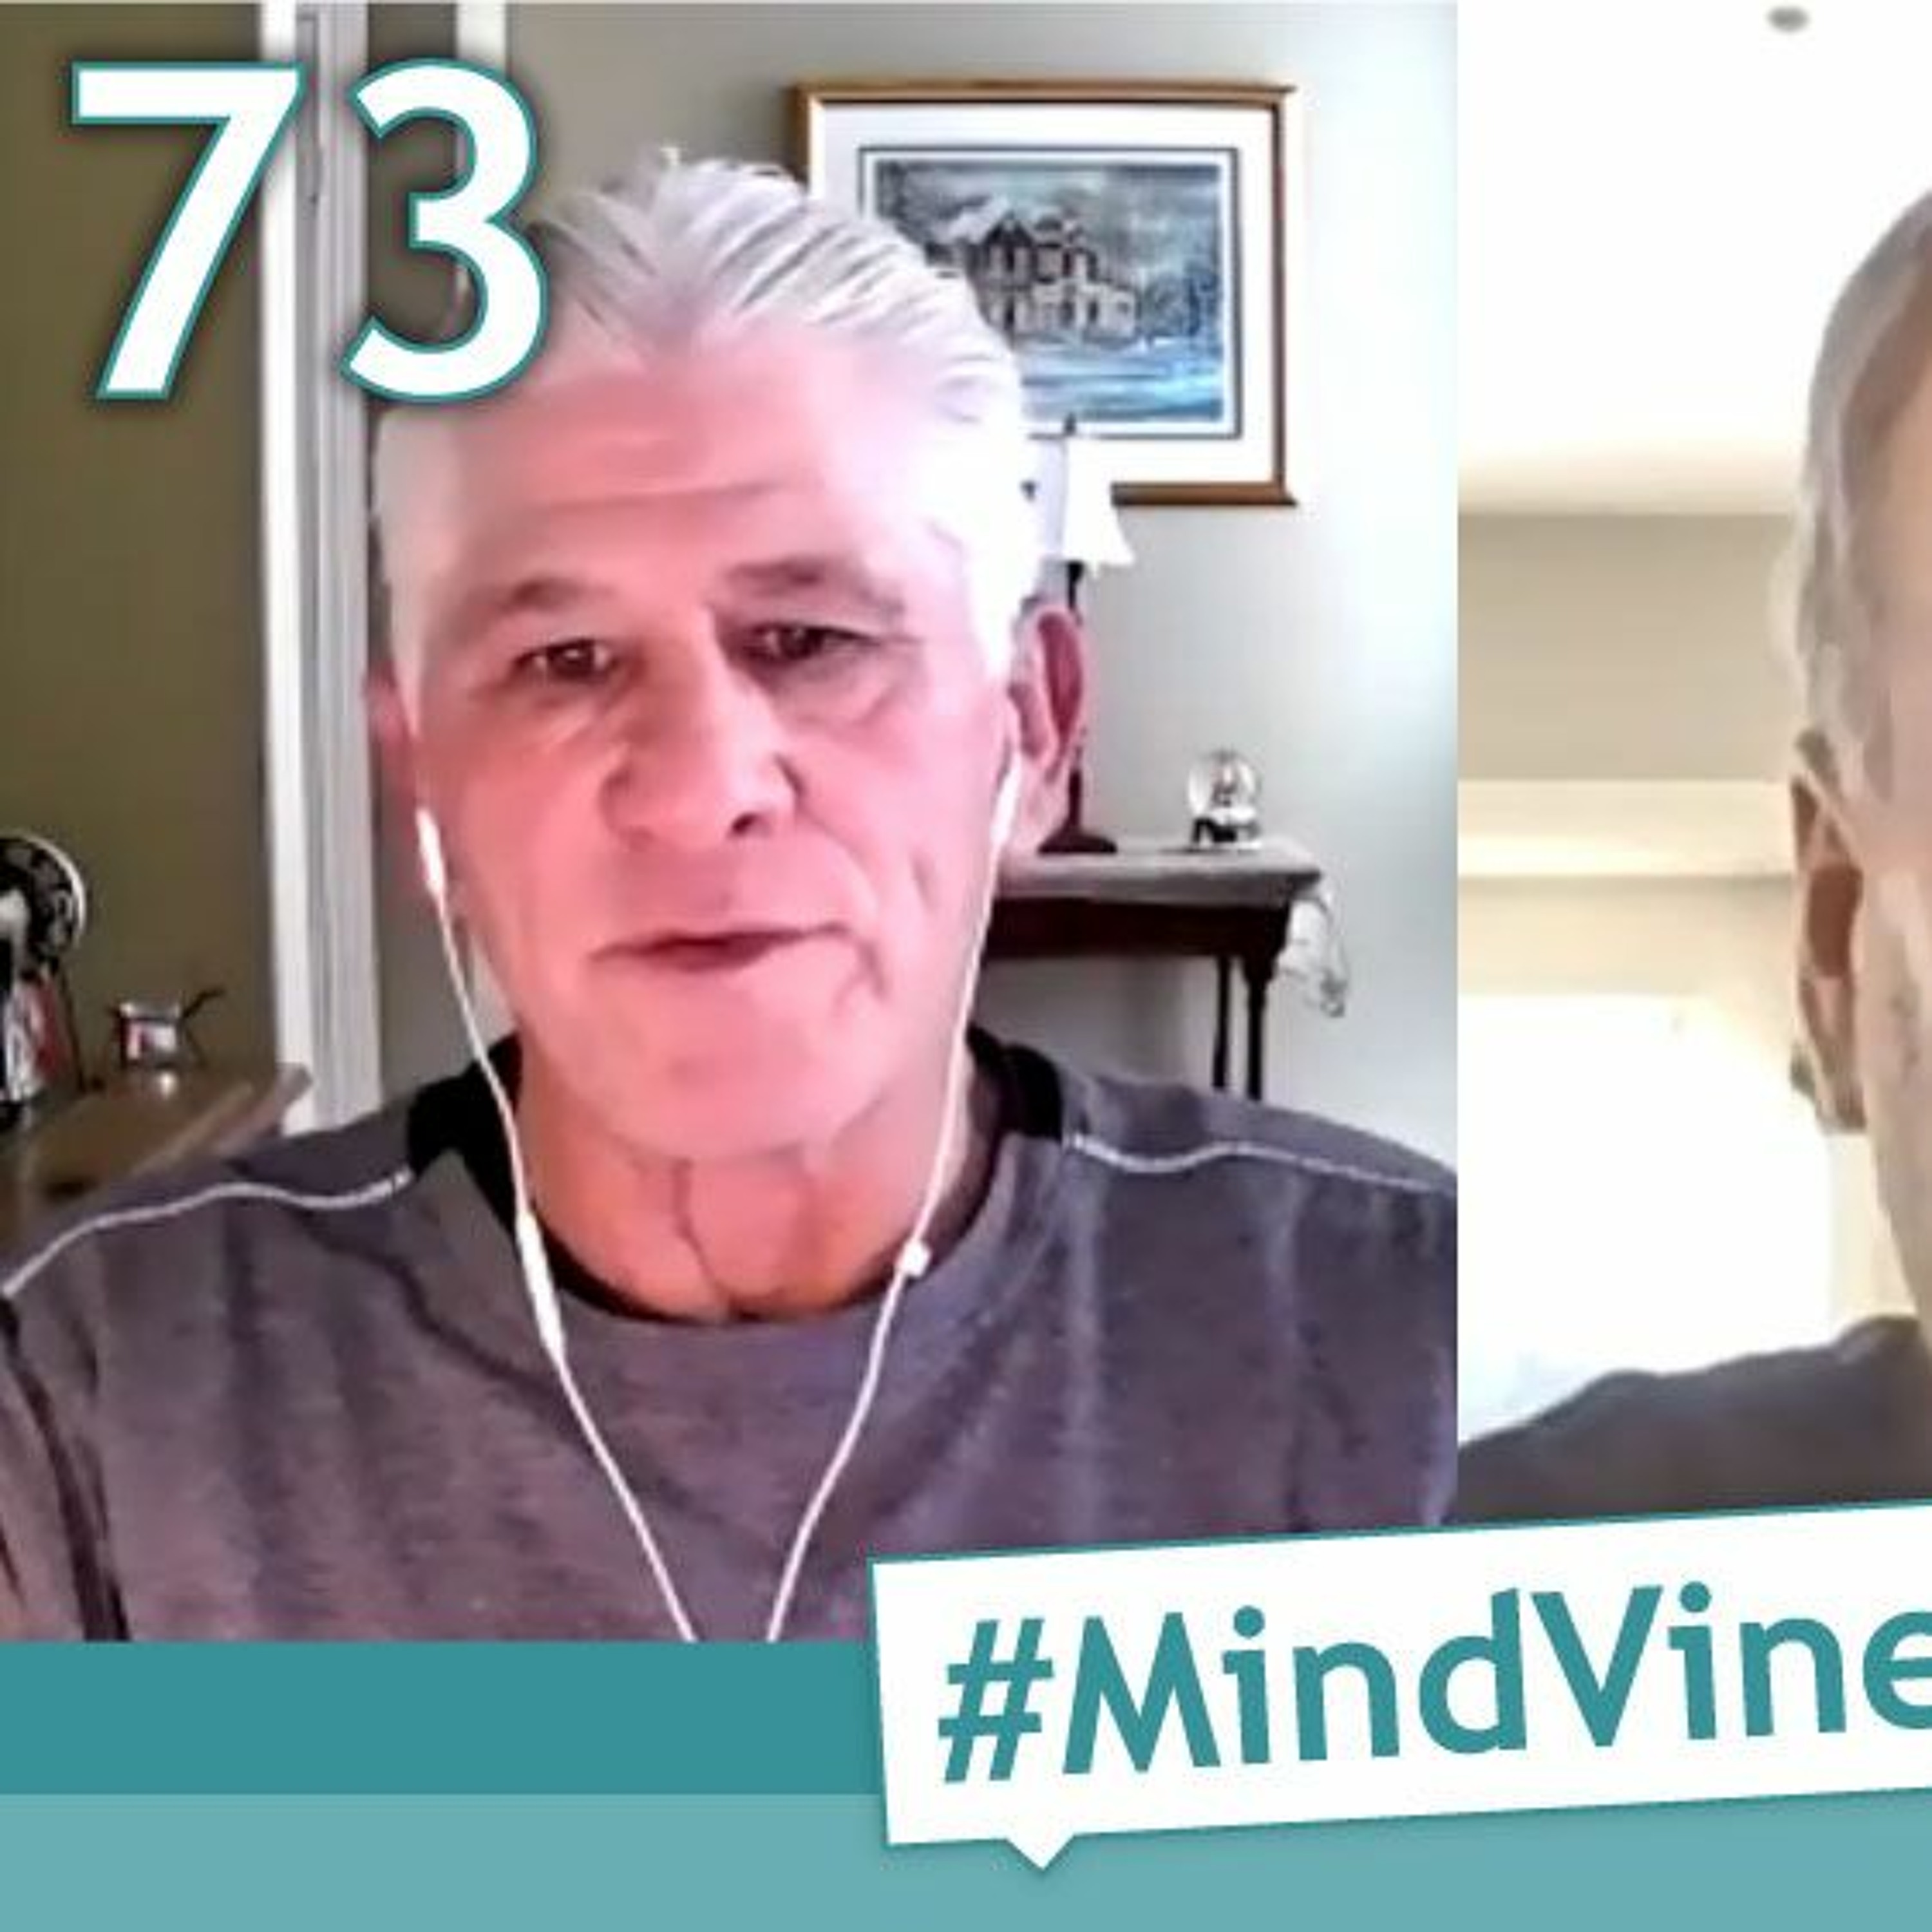 #MindVine Podcast Episode 73 - Former Leafs Captain Rick Vaive & Hockey Writer Scott Morrison